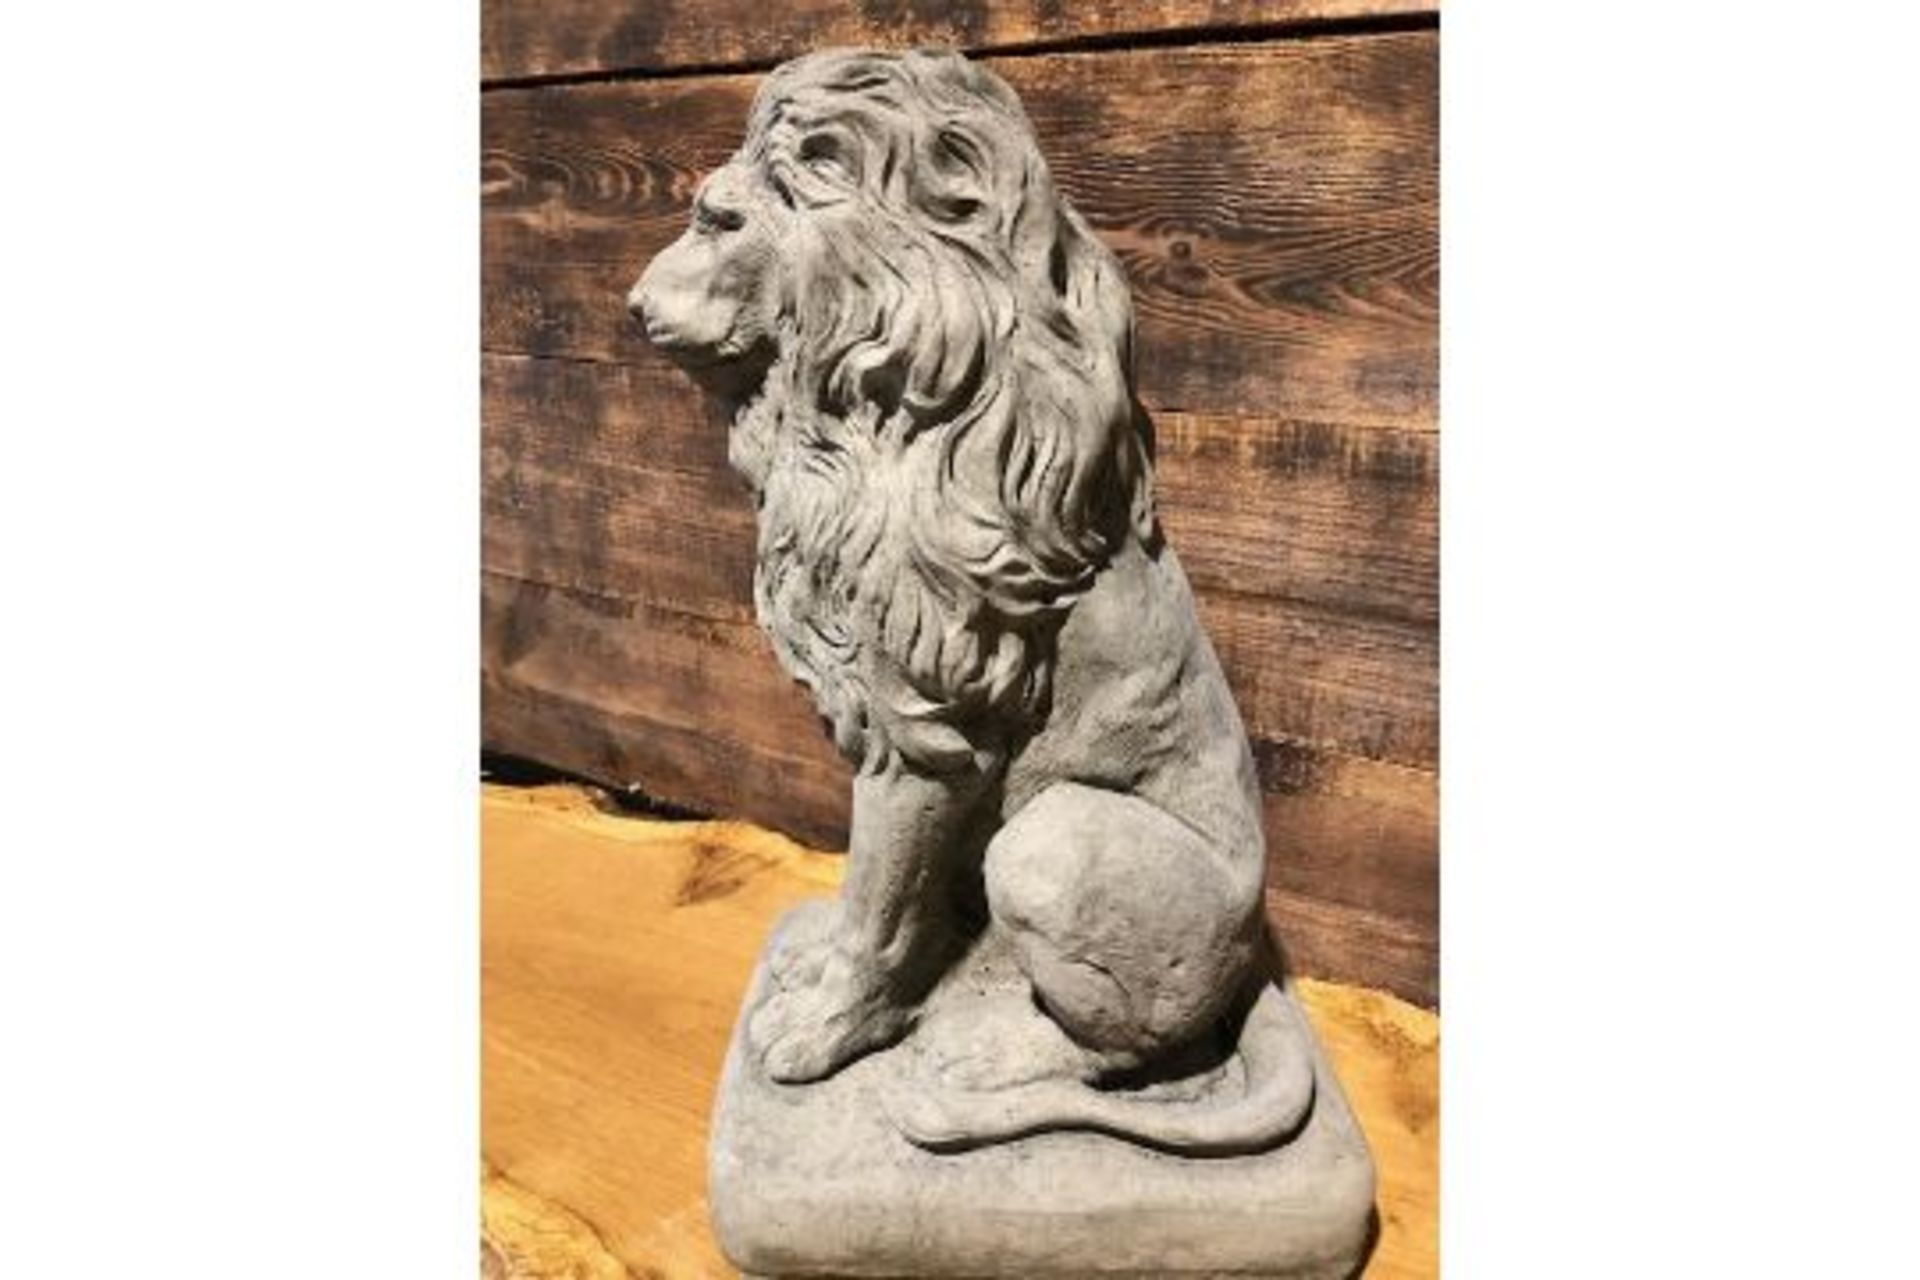 * Large Stone Lion sitting on a plinth